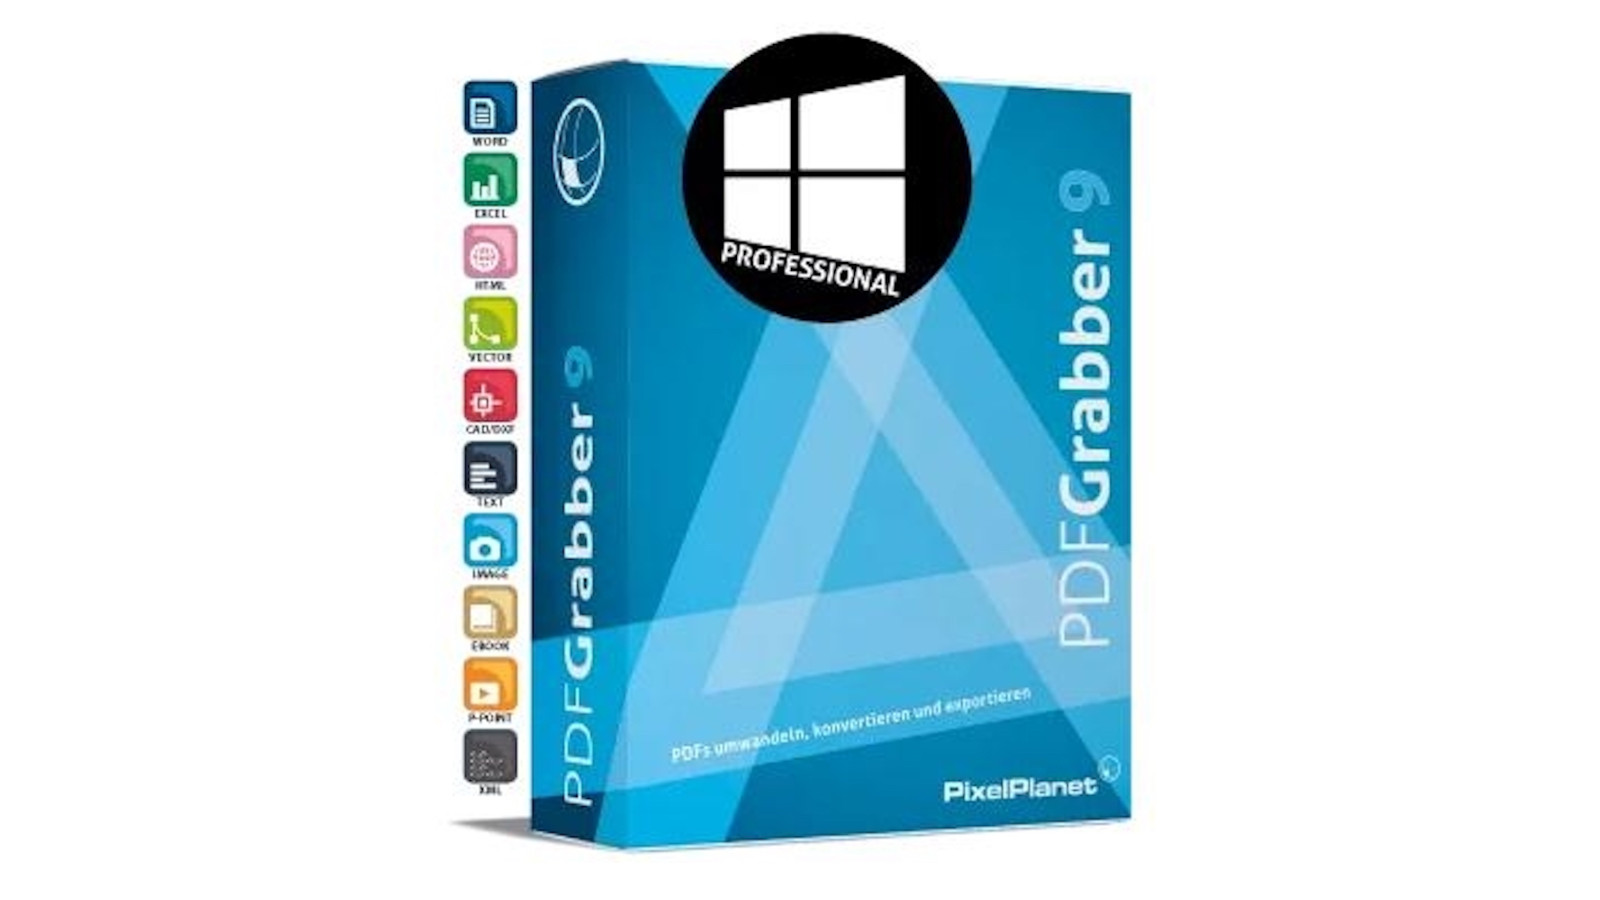 PixelPlanet PdfGrabber 9 Professional Network Licence Key (Lifetime / 5 Users) [$ 7.74]